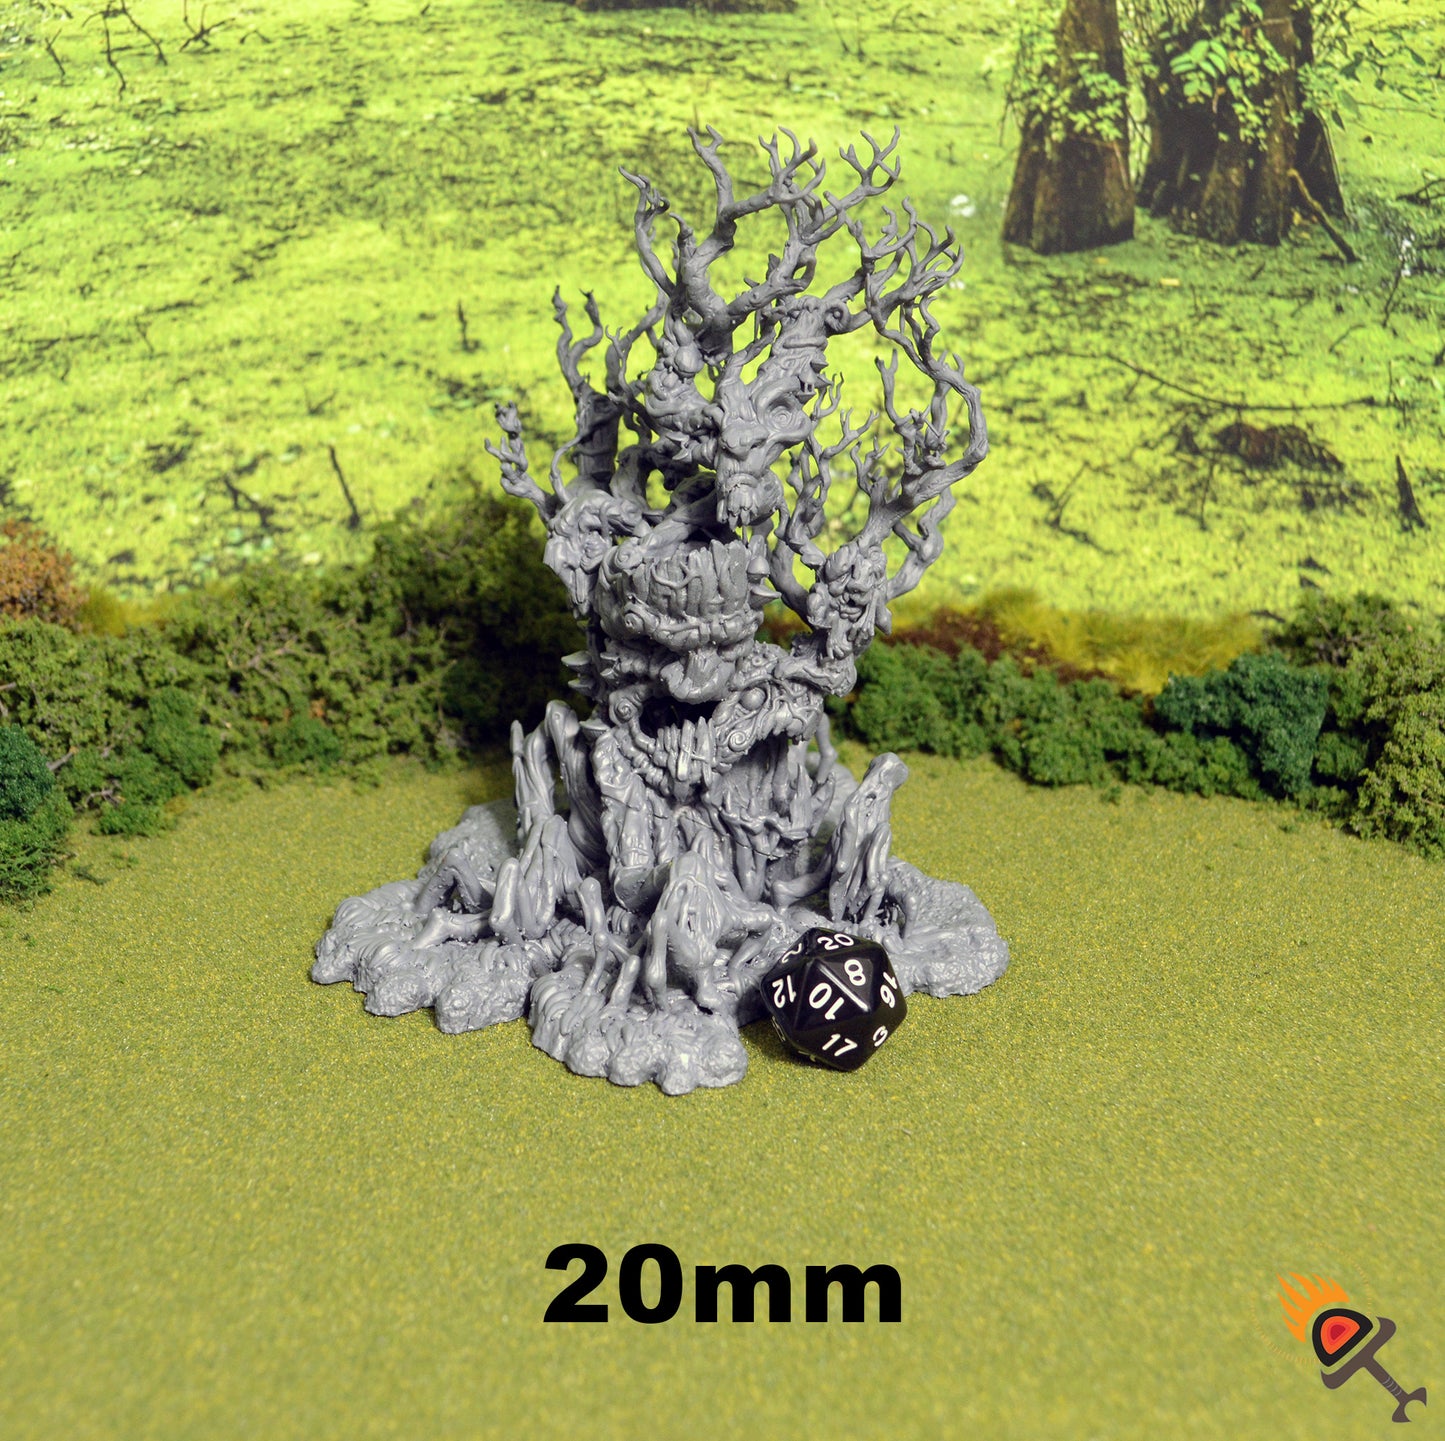 Miniature Plague Tree for DnD Swamp Terrain 15mm 28mm 32mm, Lizardfolk Terrain for D&D Pathfinder Warhammer Lustria, Gloaming Swamps